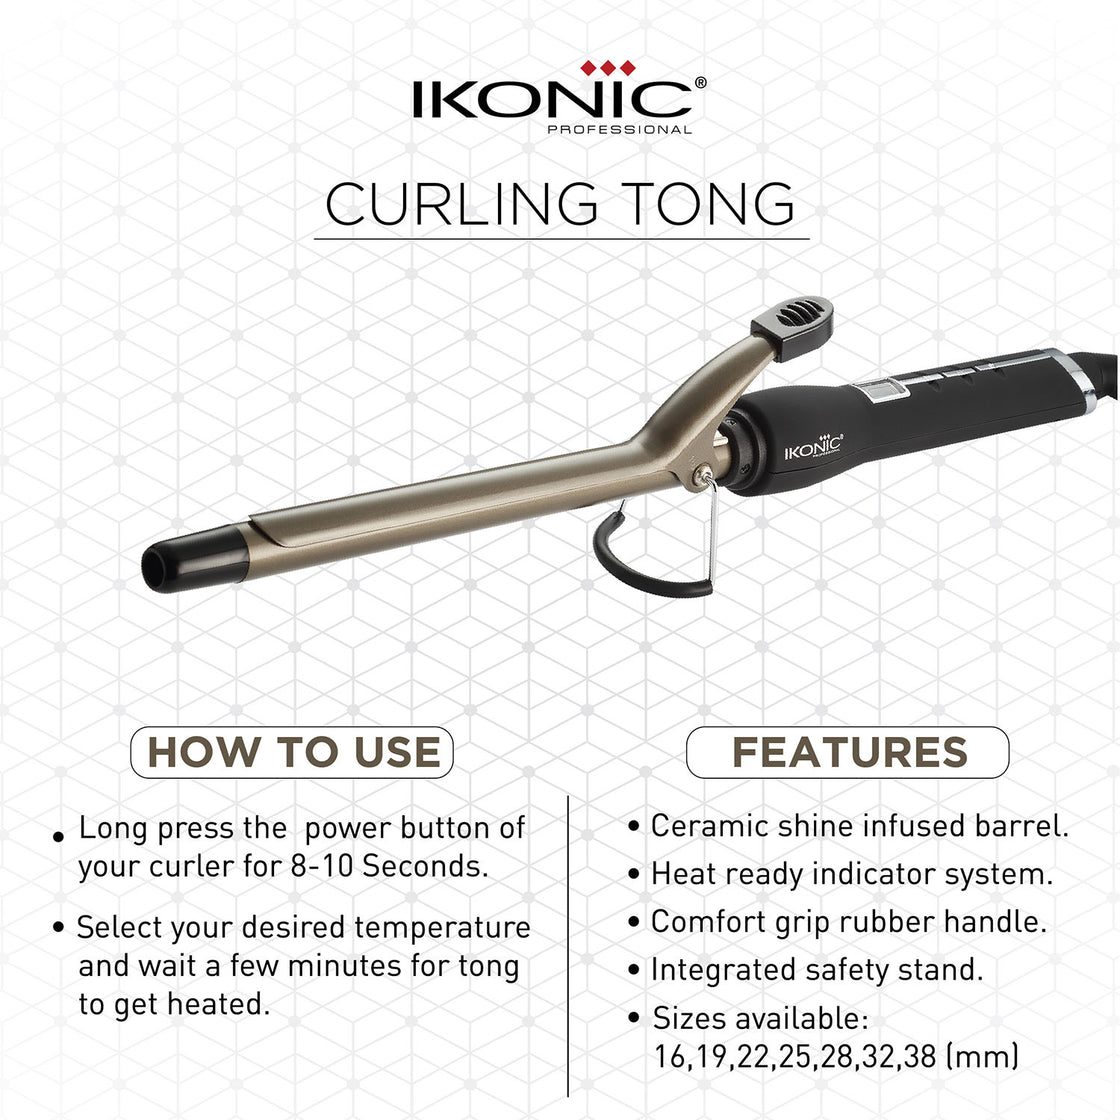 Ikonic Professional Curling Tong Black (CT25)